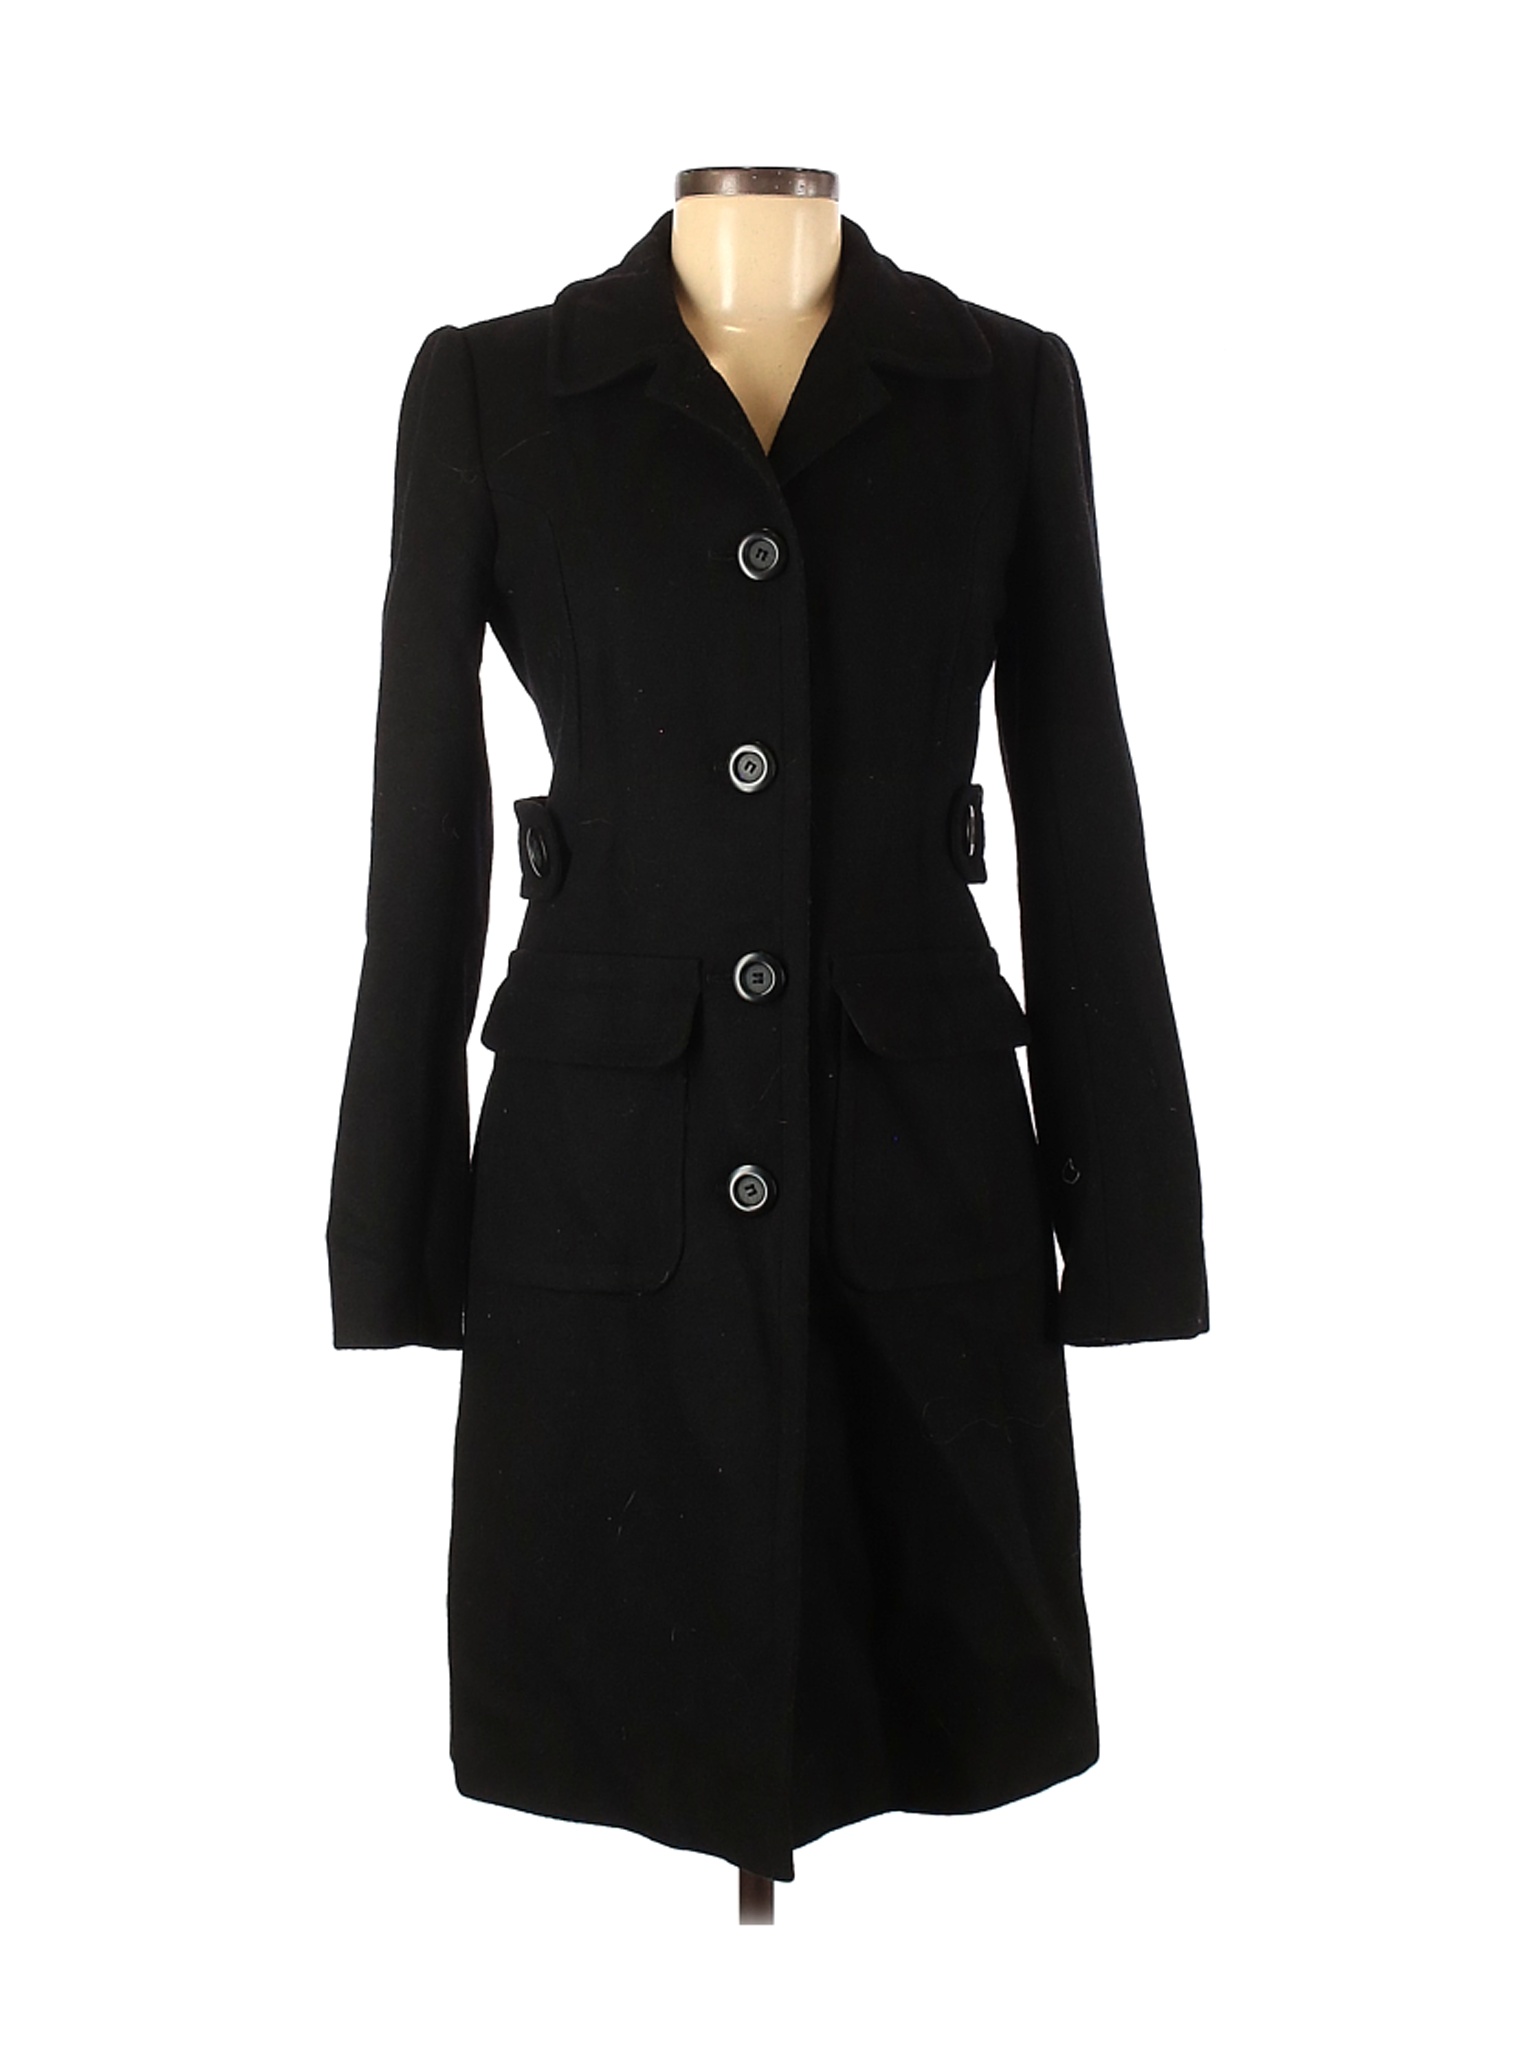 Moda International 100% Wool Solid Black Wool Coat Size 2 (Tall) - 57% ...